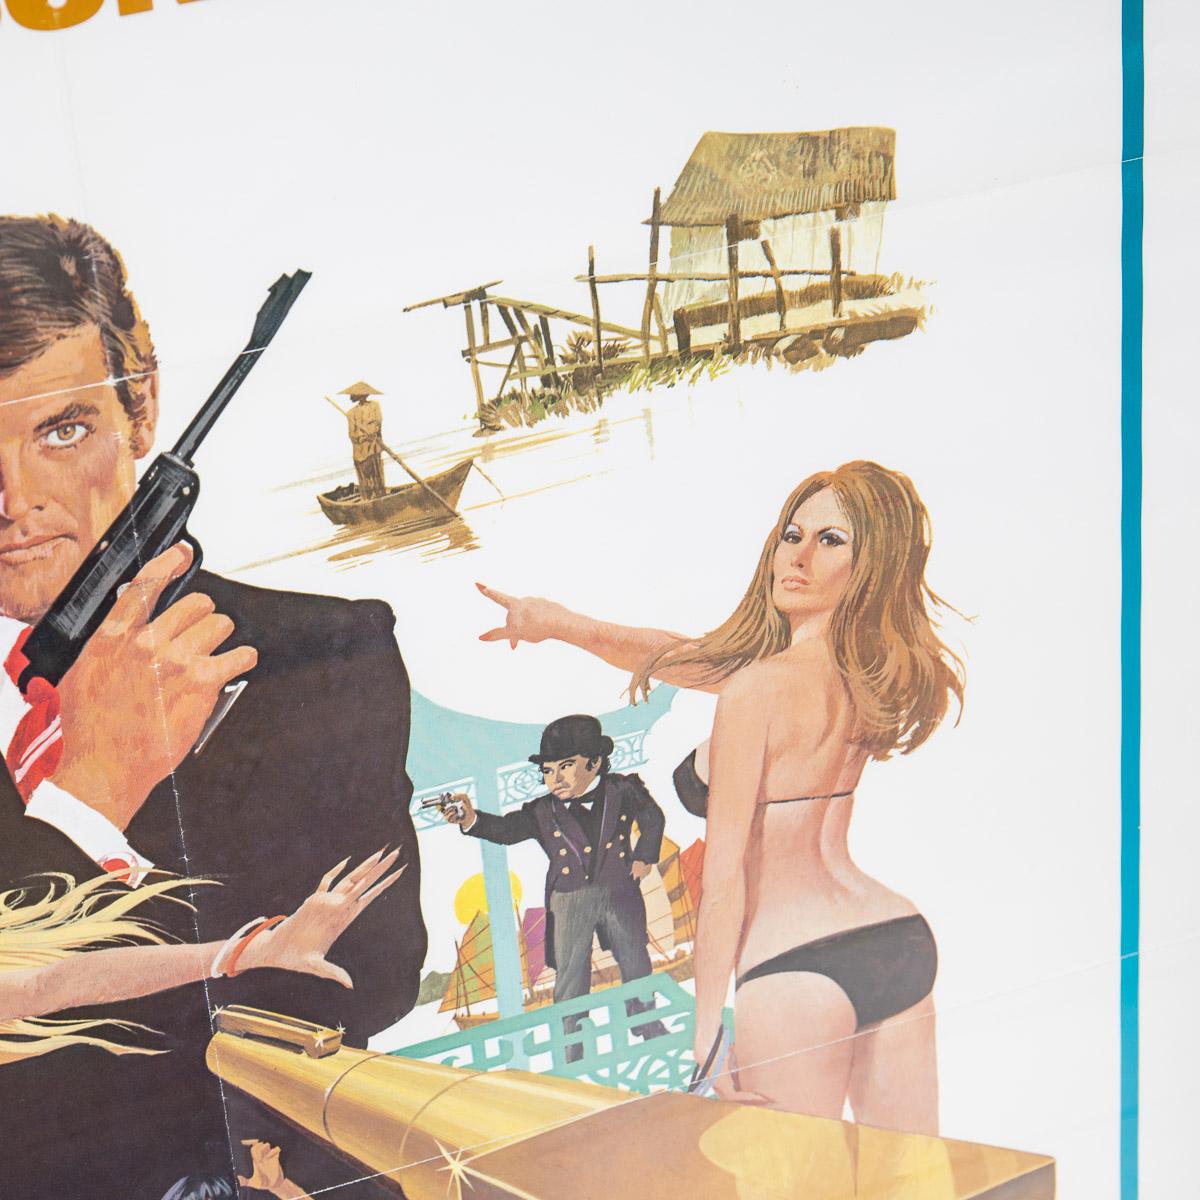 Paper Original American 'U.S' Release James Bond 'Man with the Golden Gun', c.1974